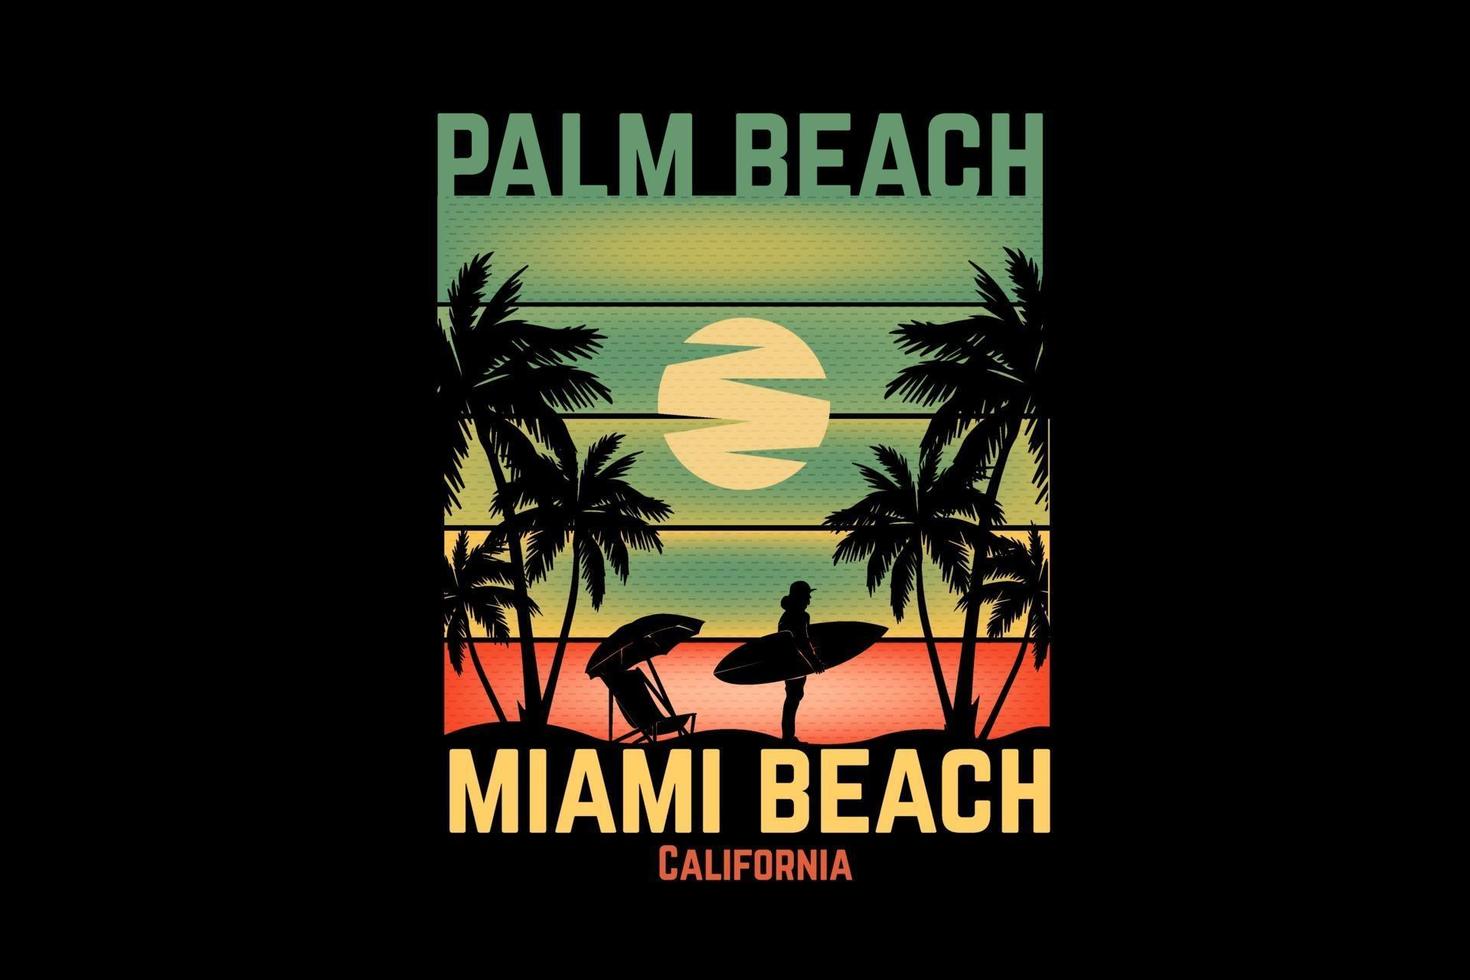 palm beach miami beach california silhouette design vector